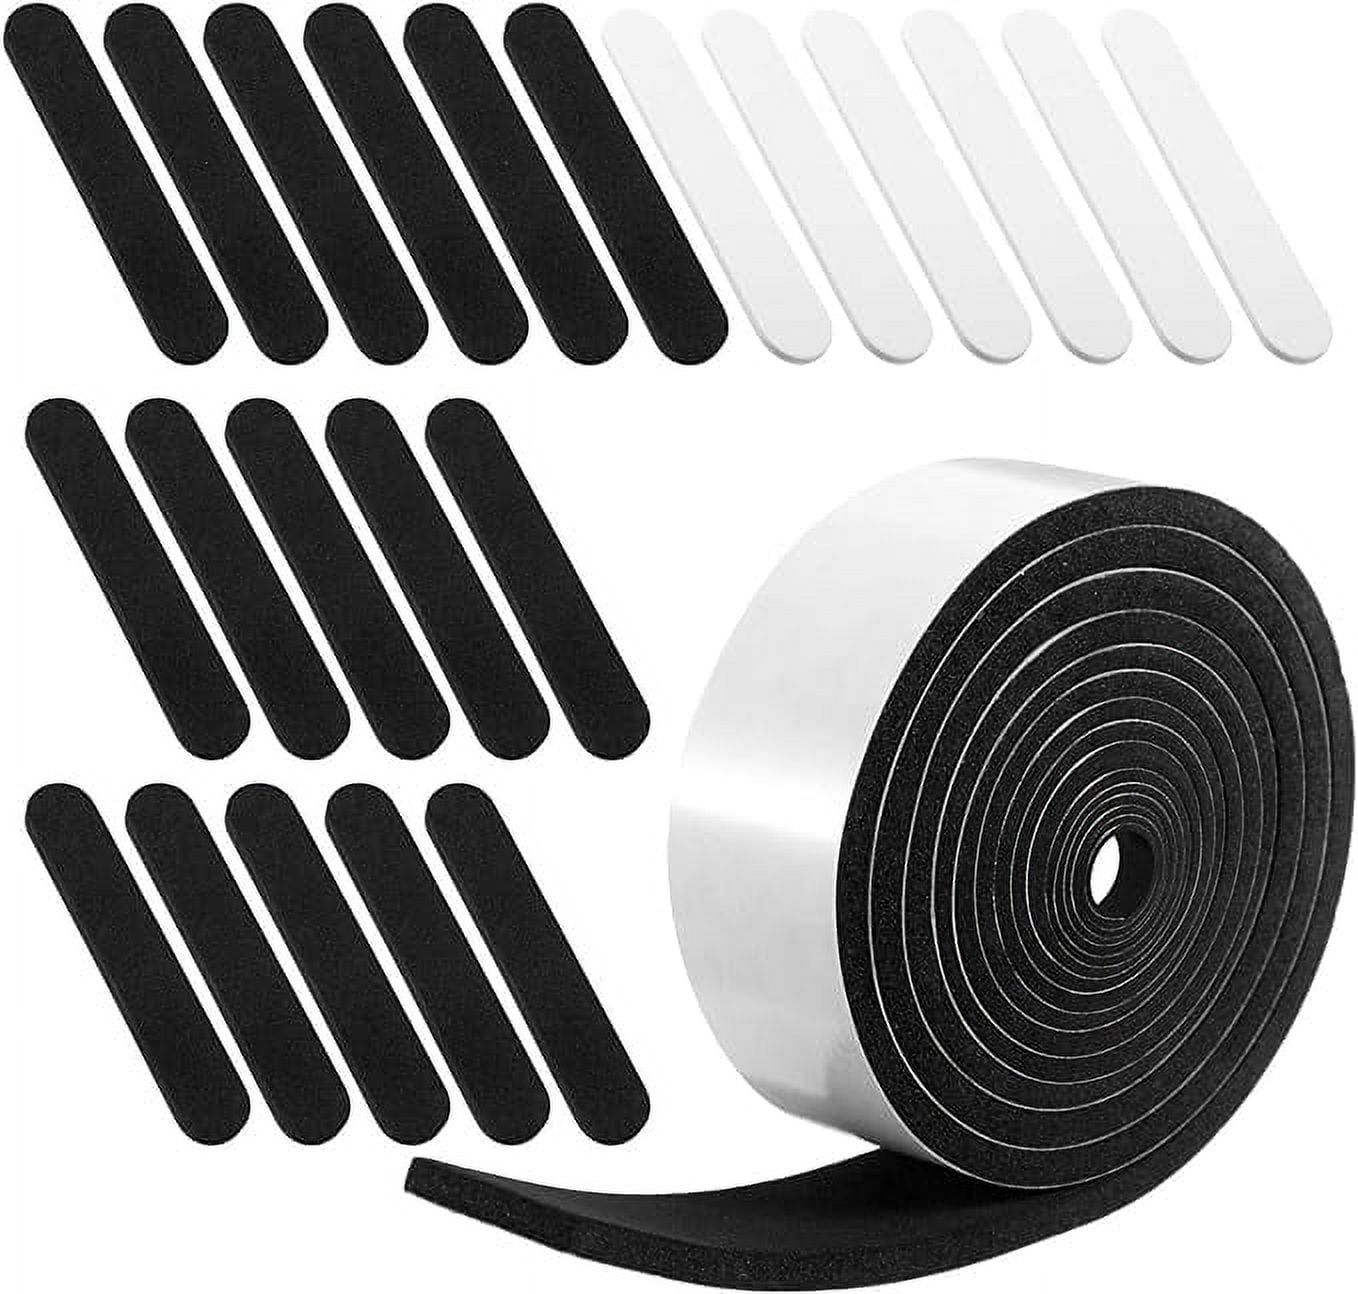 Pmsanzay Hat Size Reducer Foam Tape Roll - Sizing Tape Foam Inserts Premium  Quality Soft On Skin - Self Adhesive Strip Insert 60cm (24 inch) - No Hat